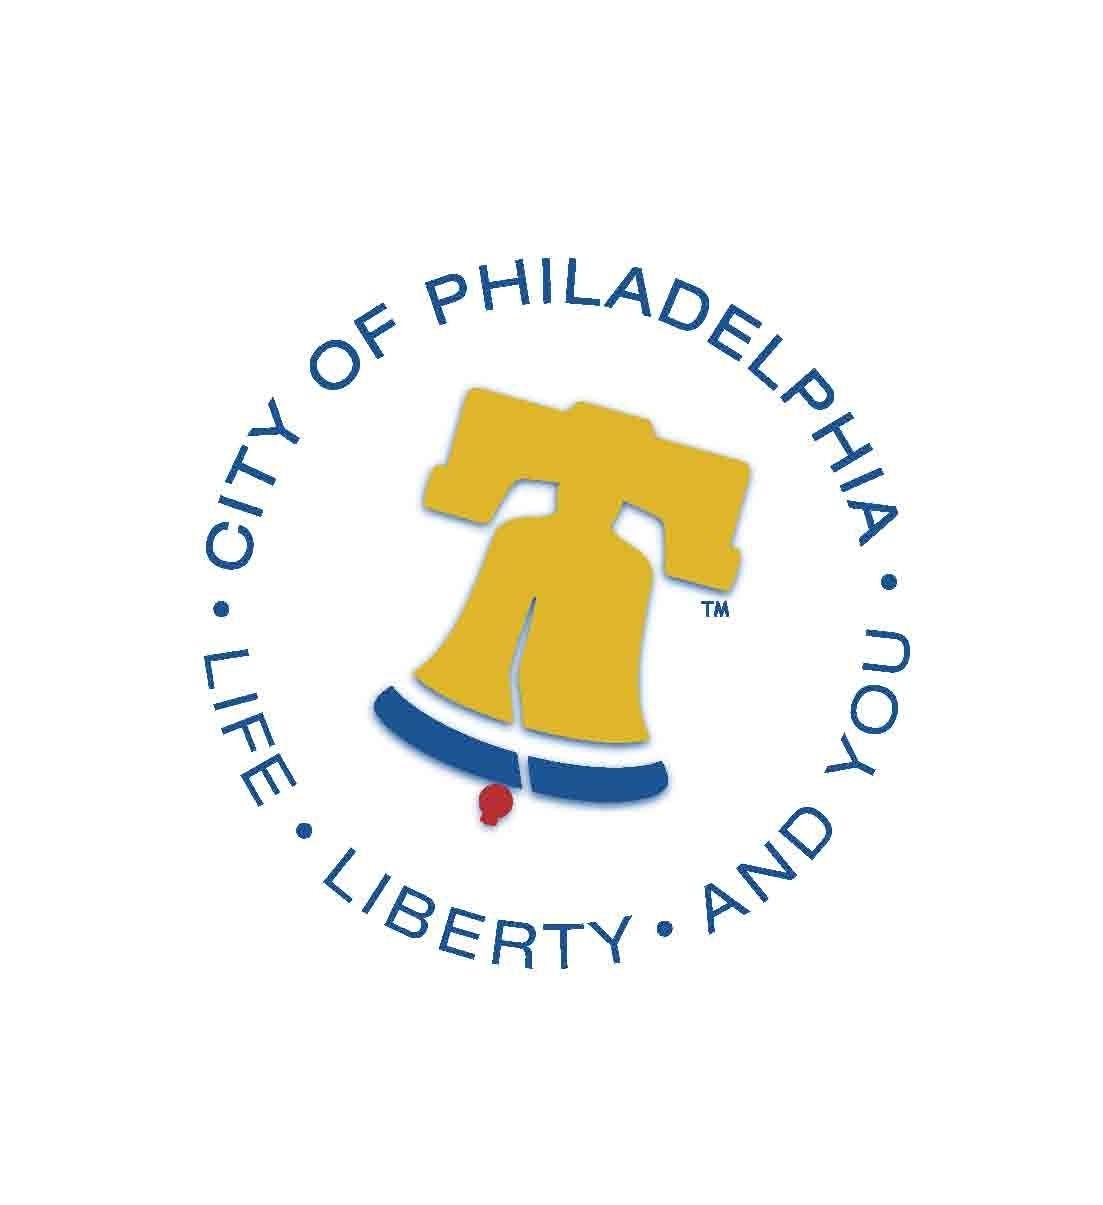 Philadelphia Logo - Philadelphia city logo (1) | Philadelphia Energy Authority